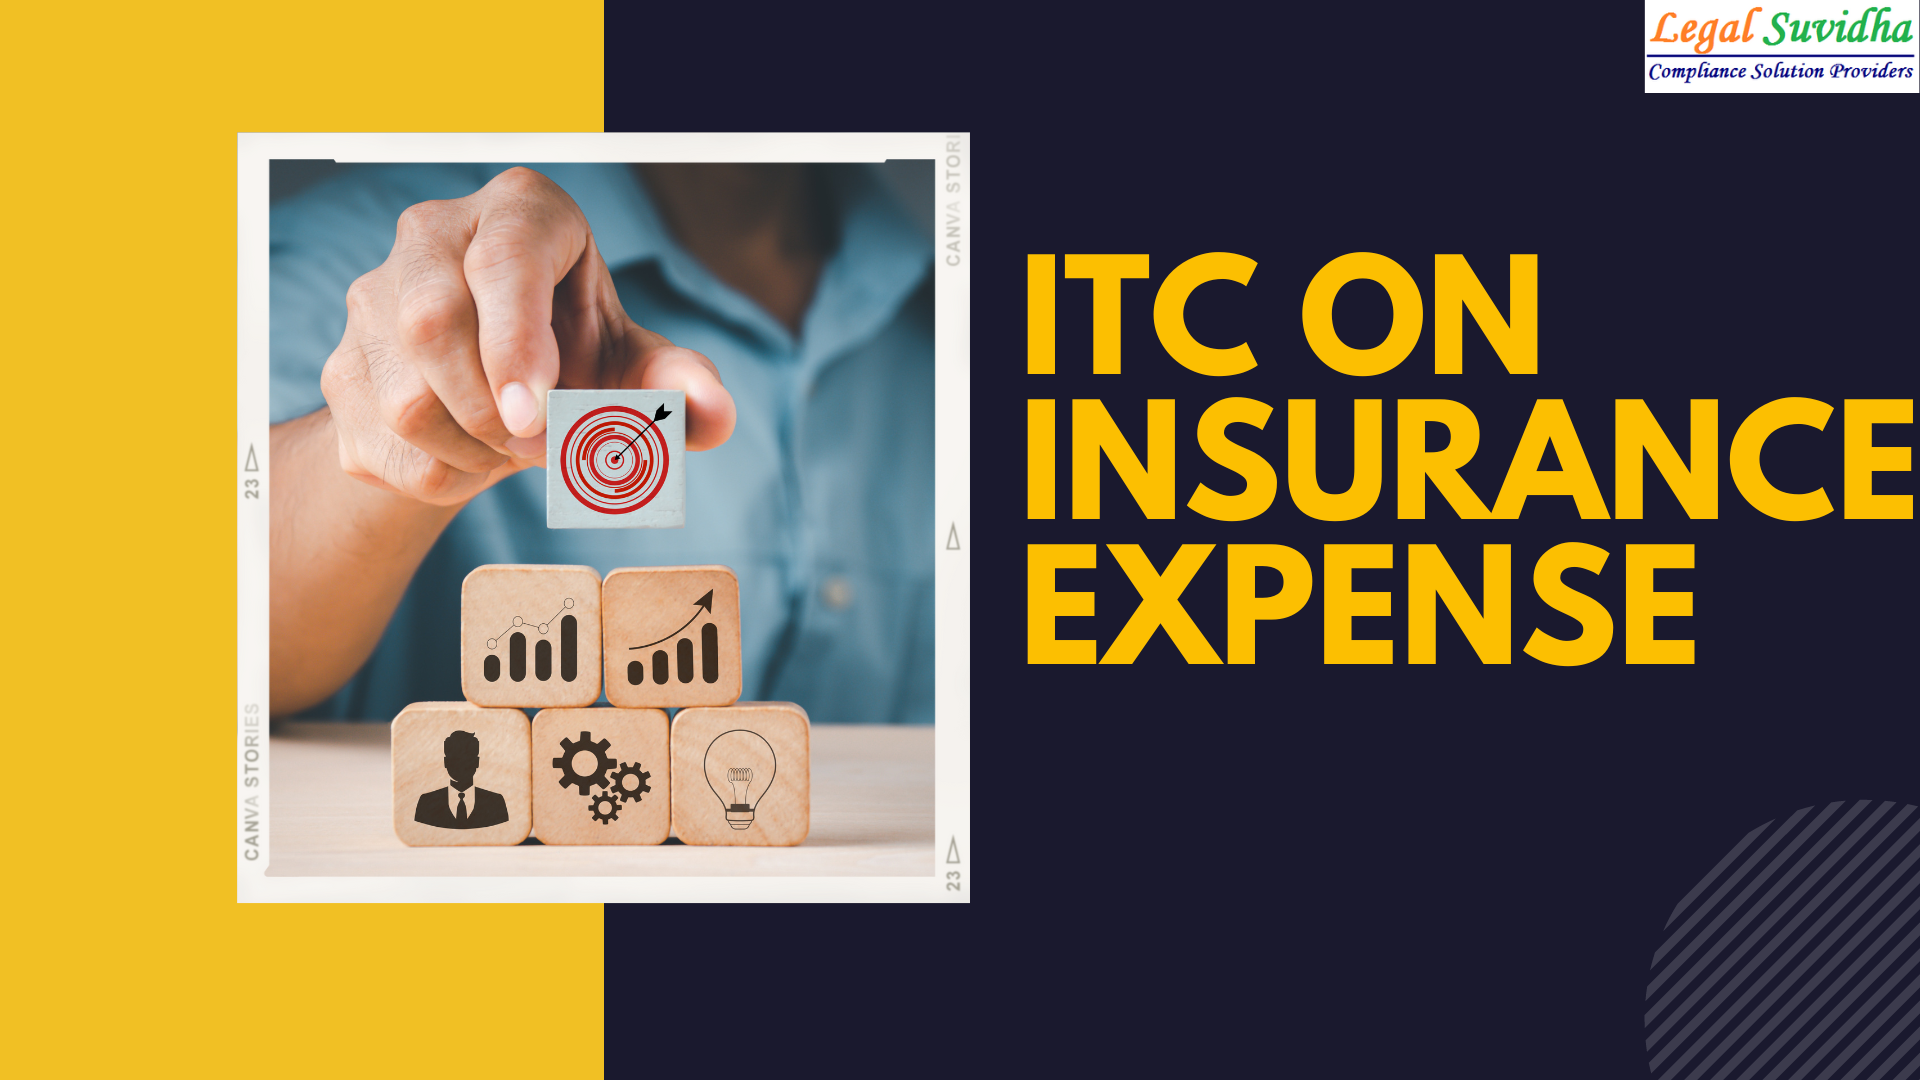 ITC on Insurance expense